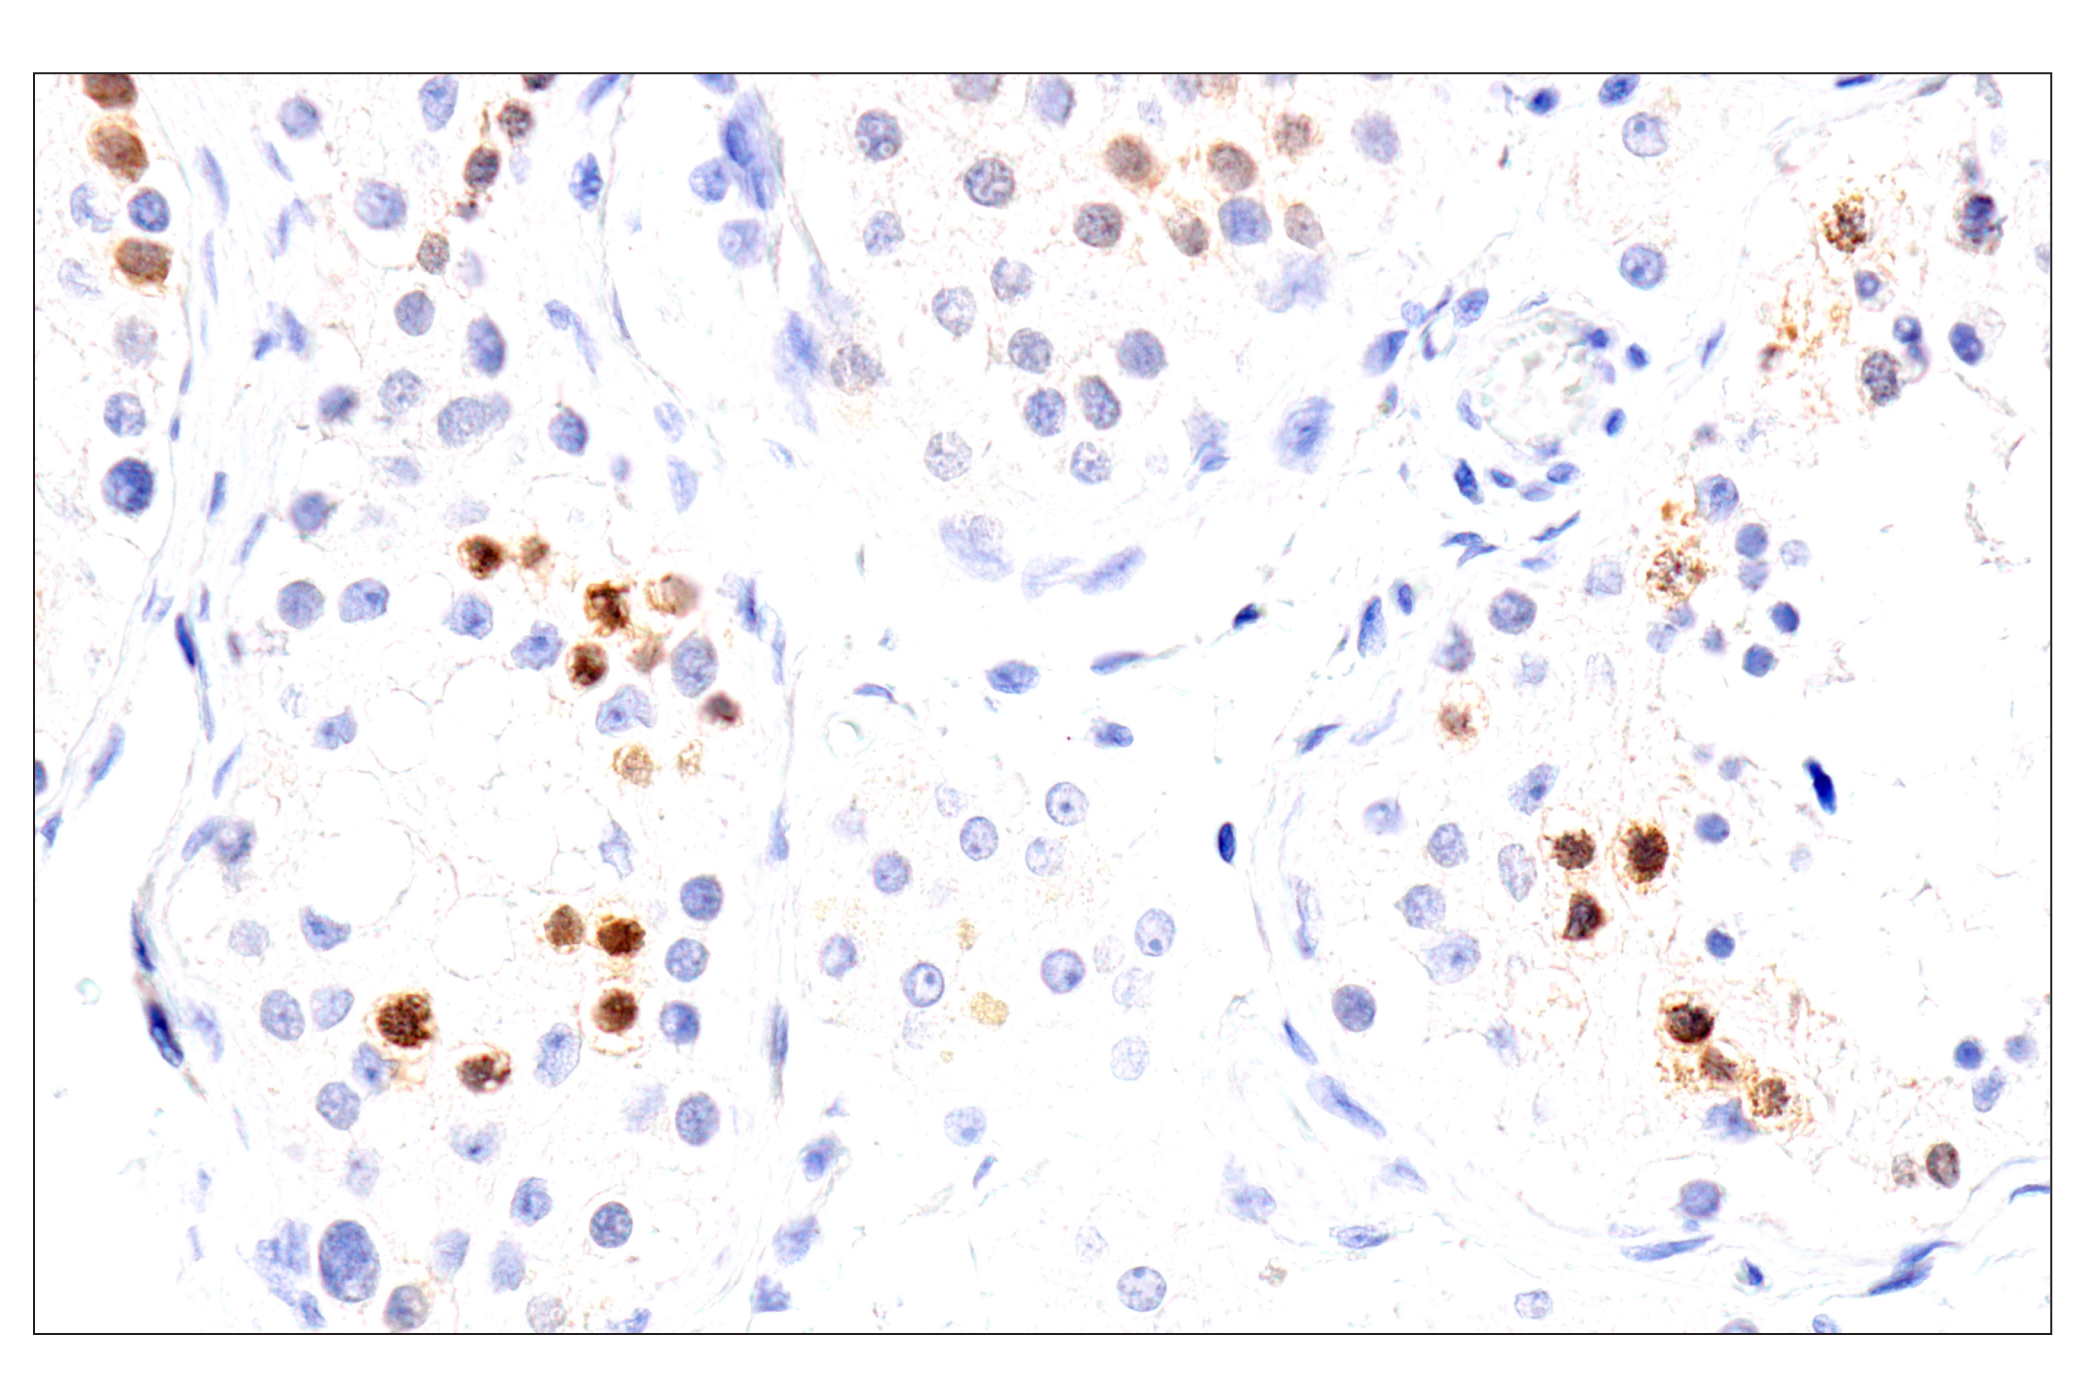  Image 18: PhosphoPlus® Chk1 (Ser317) Antibody Duet